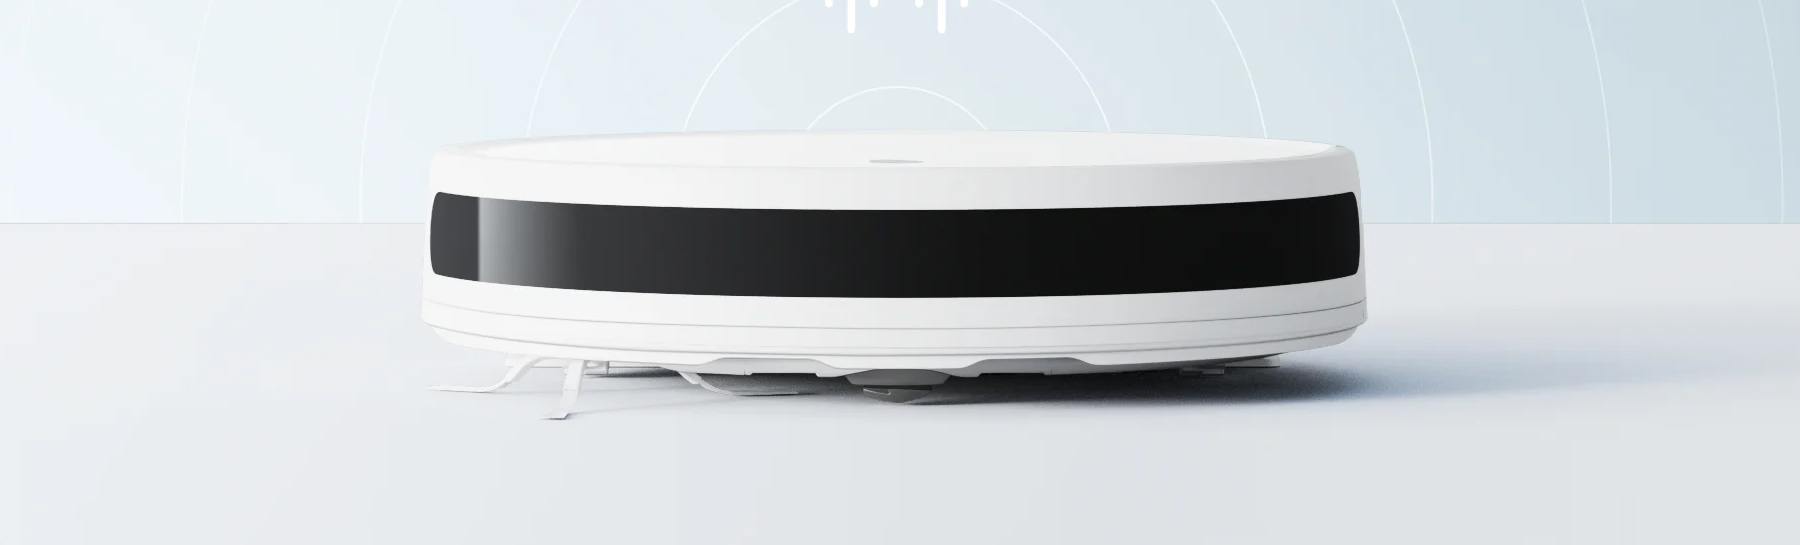 Xiaomi E10 aspirapolvere robot 0,4 L Senza sacchetto Bianco - BHR6783EU 